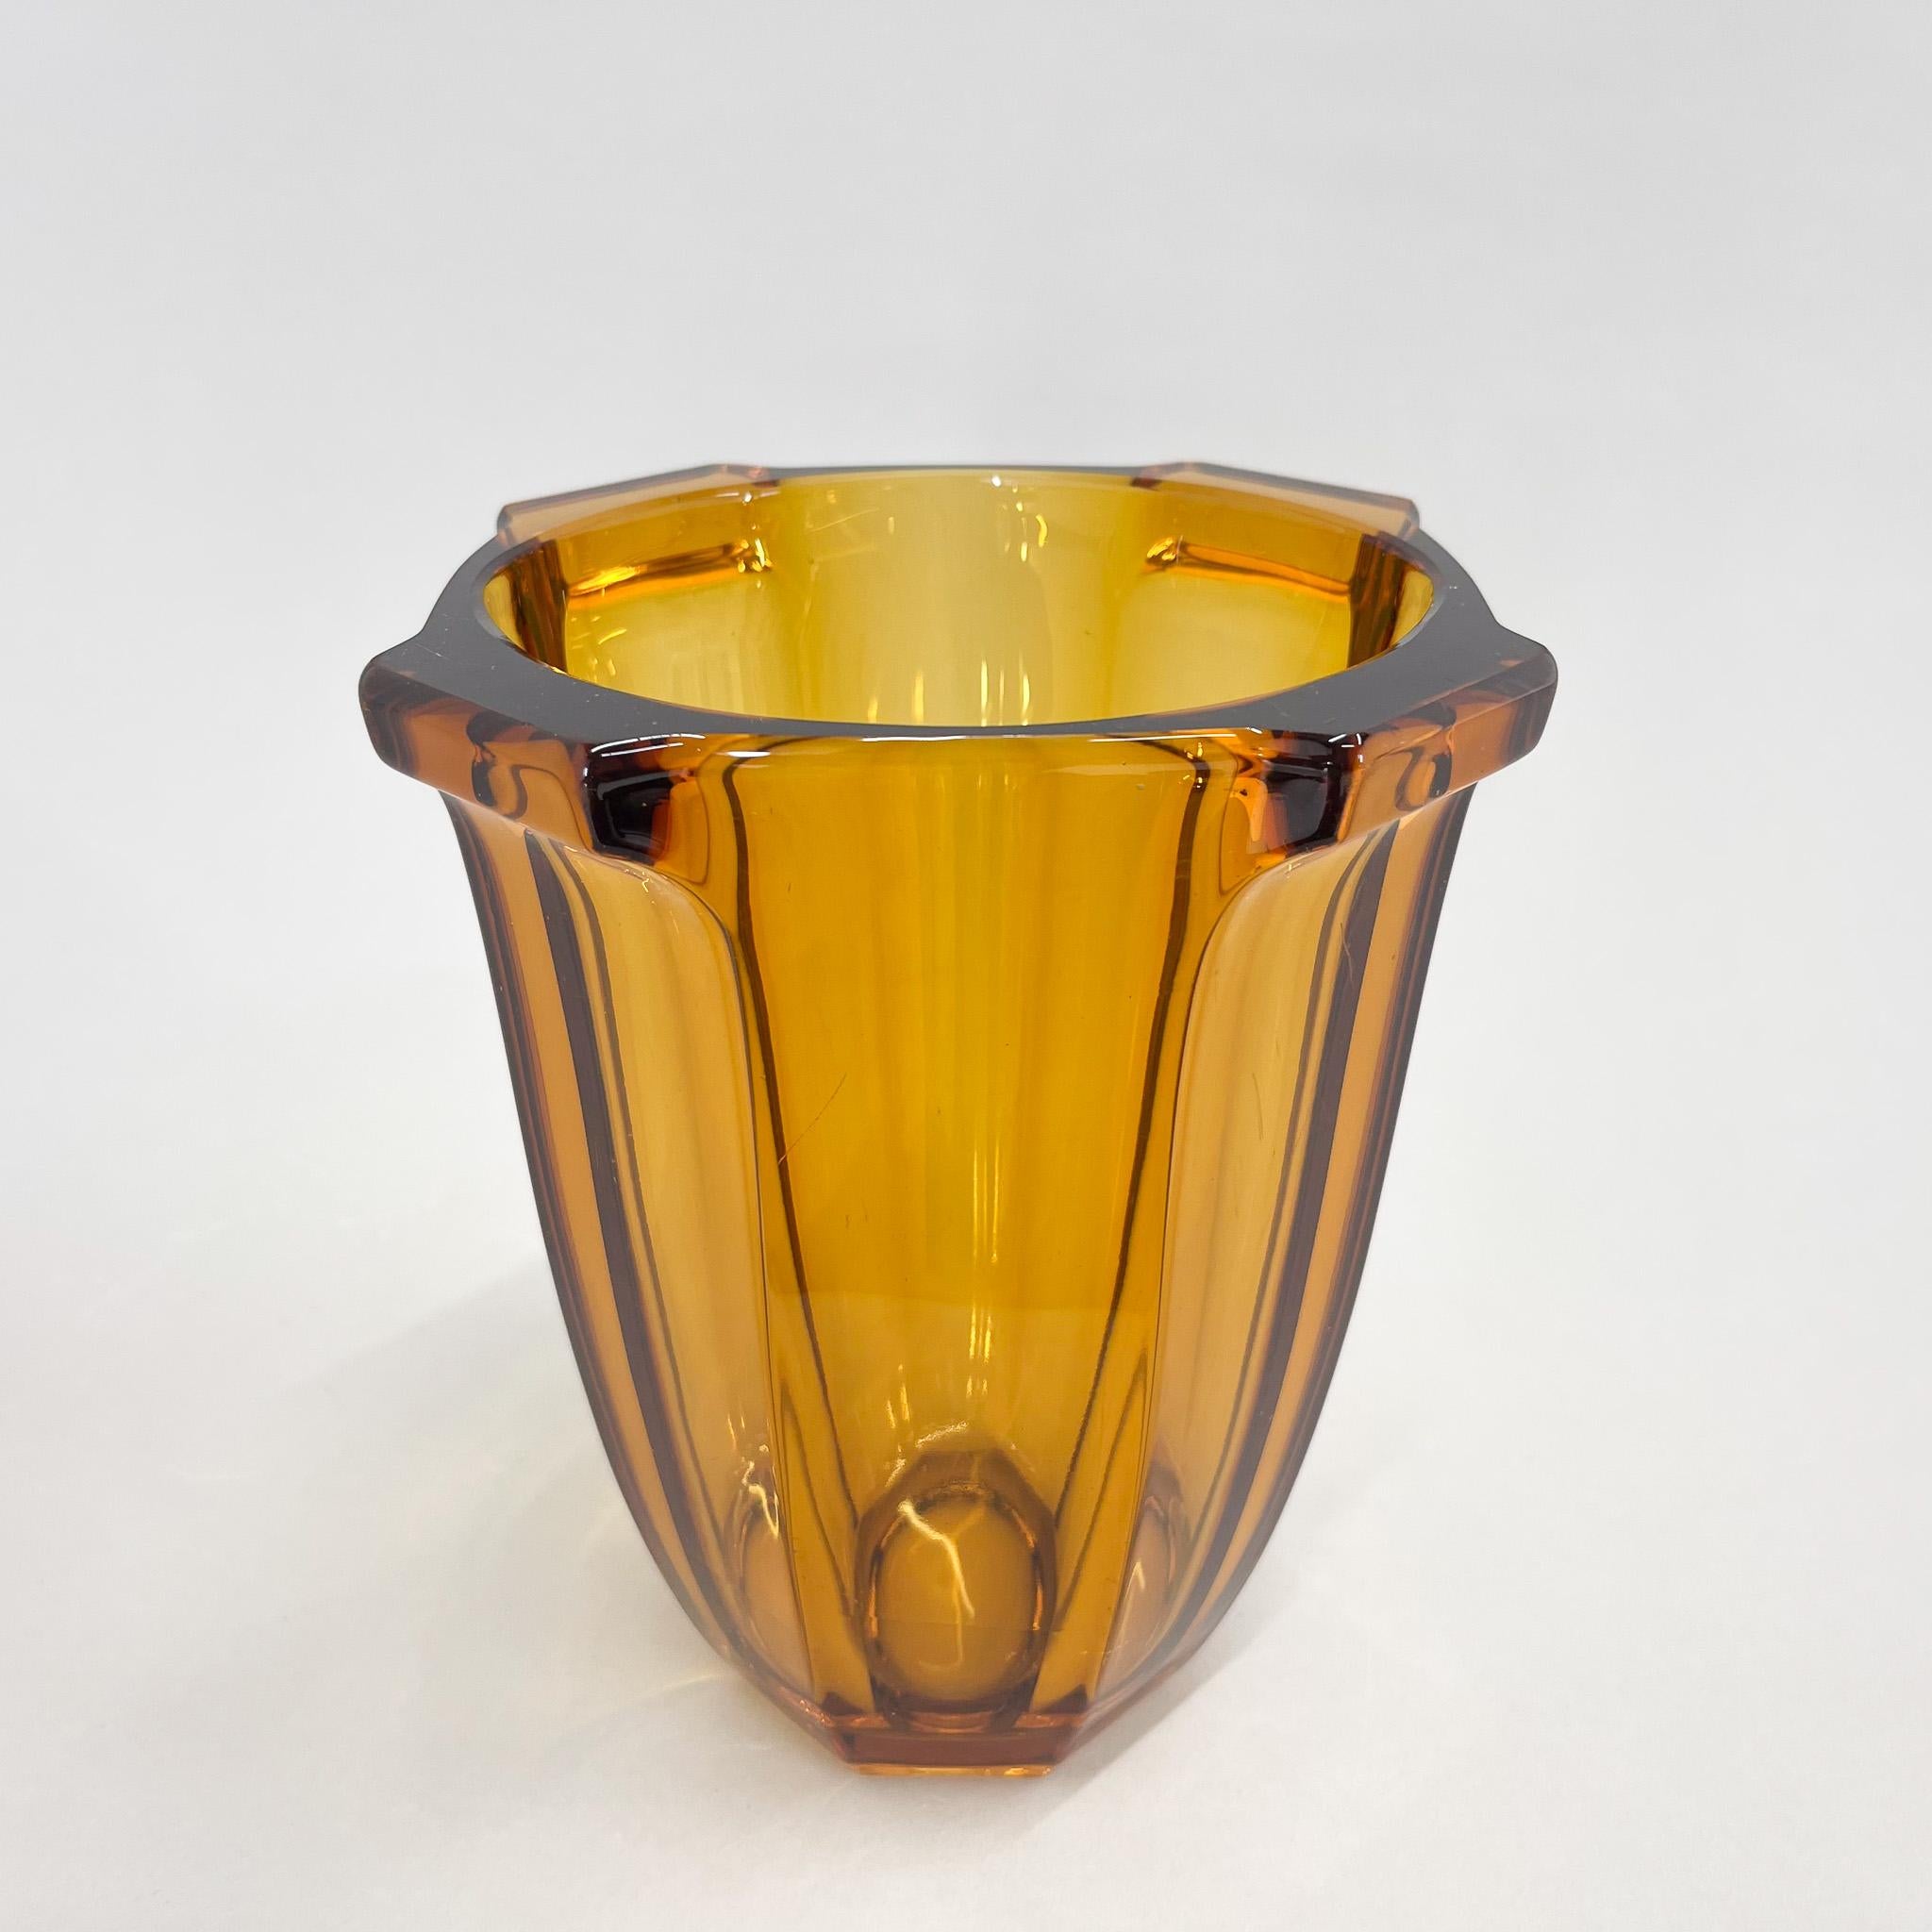 Art deco amber glass vase designed by Rudolf Schrotter in the 1930s. Produced by Rudolfova Hut Glassworks in former Czechoslovakia.